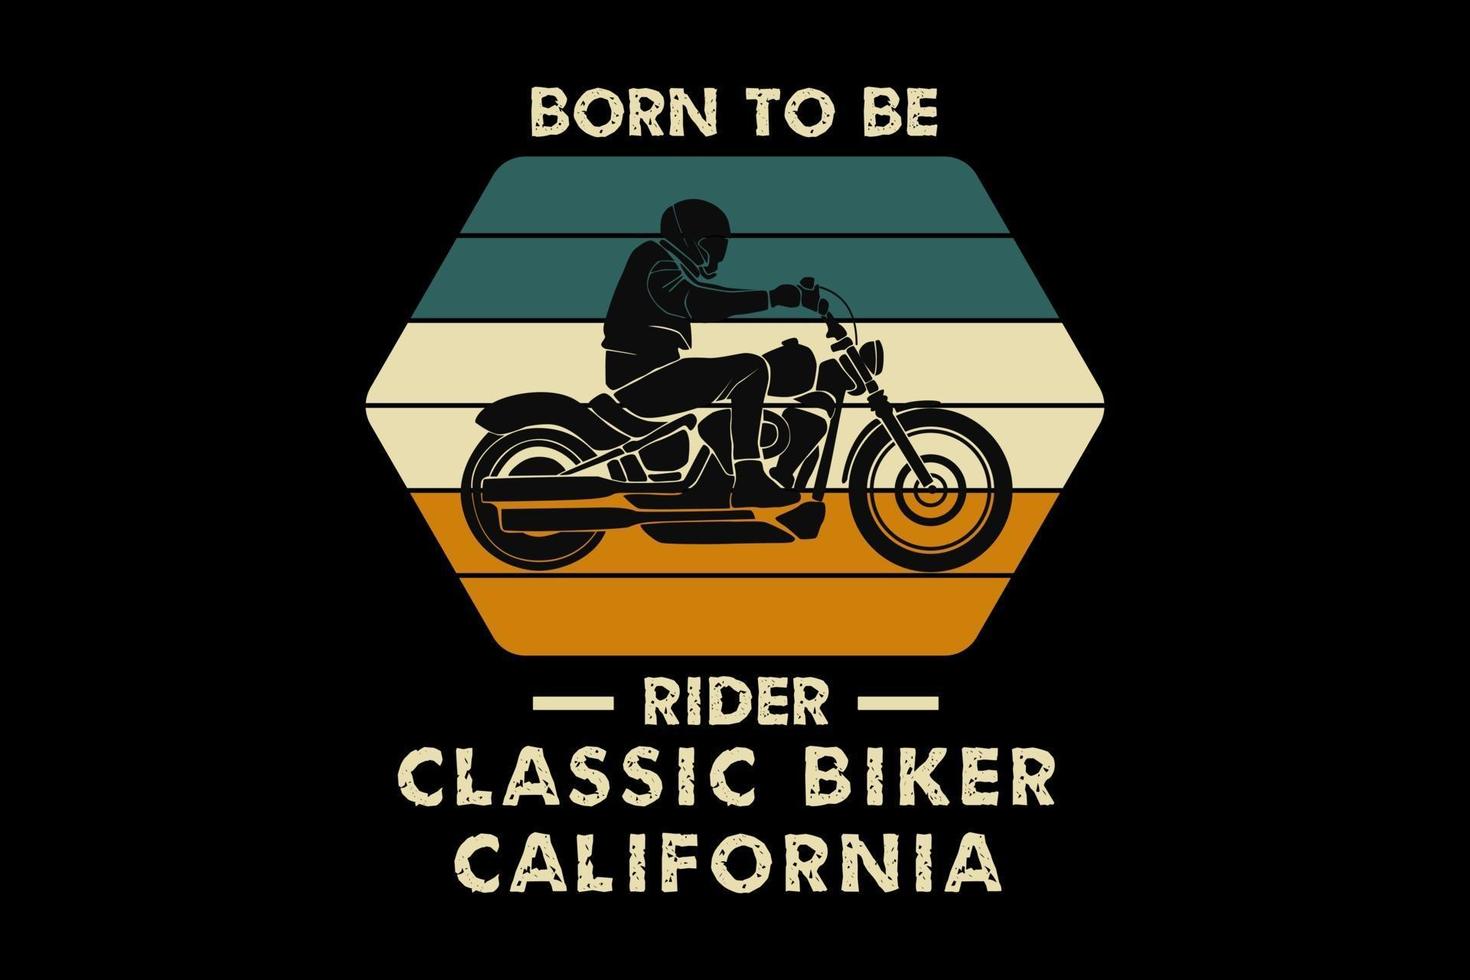 klassischer Biker Kalifornien, Design-Silhouette im Retro-Stil vektor